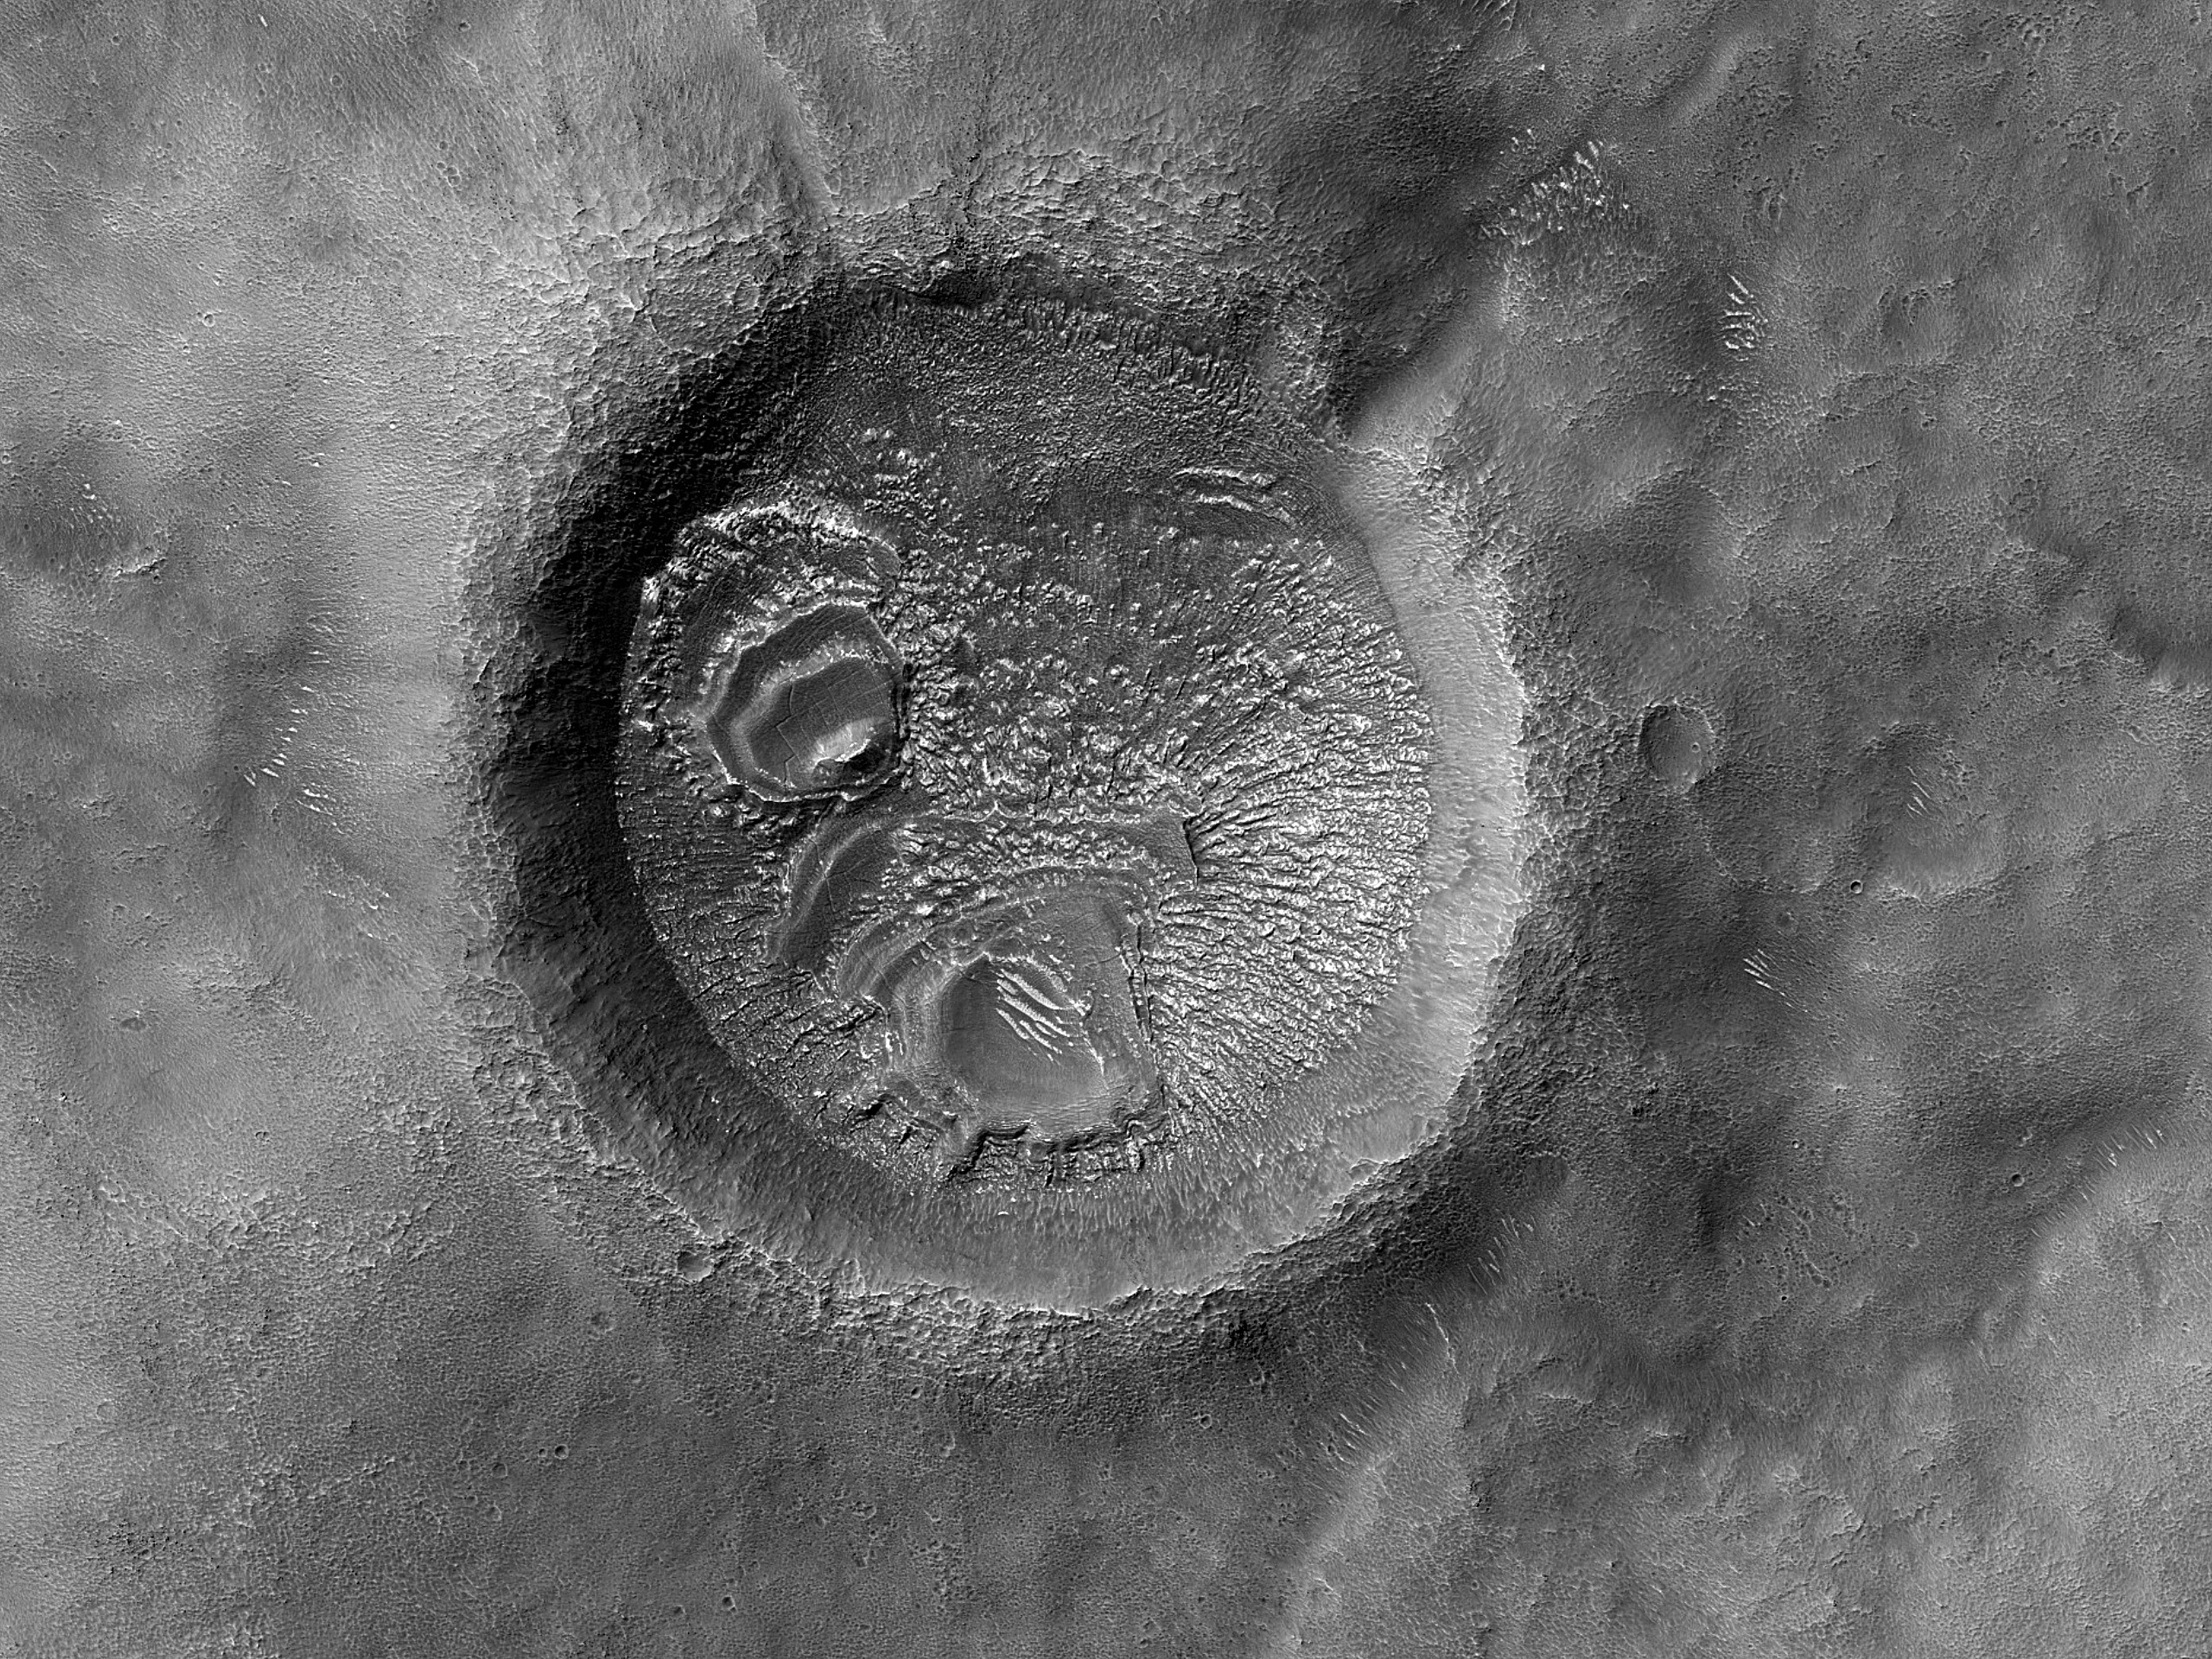 Stunning NASA photo reveals mesa-like landforms on Mars